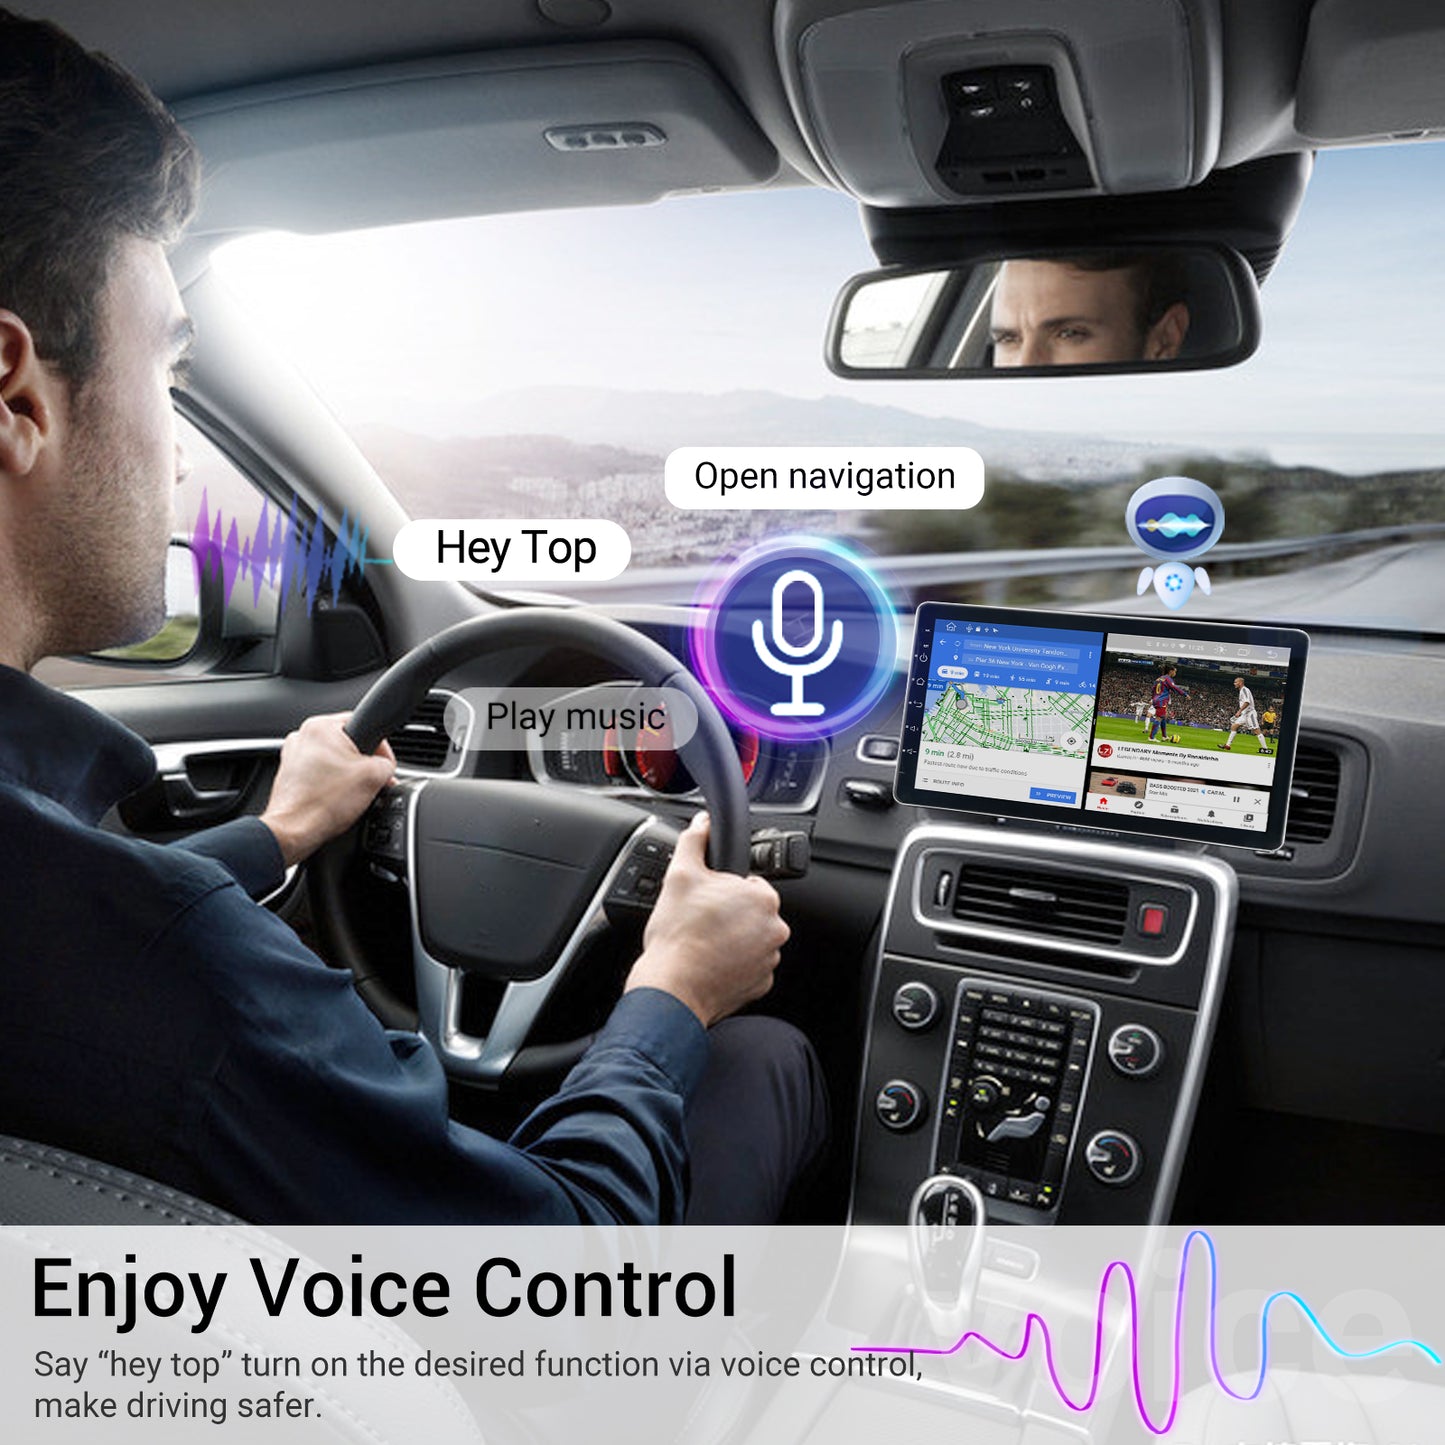 2 Din Android Autoradio für Dacia Sandero Duster Renault Captur Lada Xray 2  Logan Navigation Gps Carplay Auto Multimedia Player